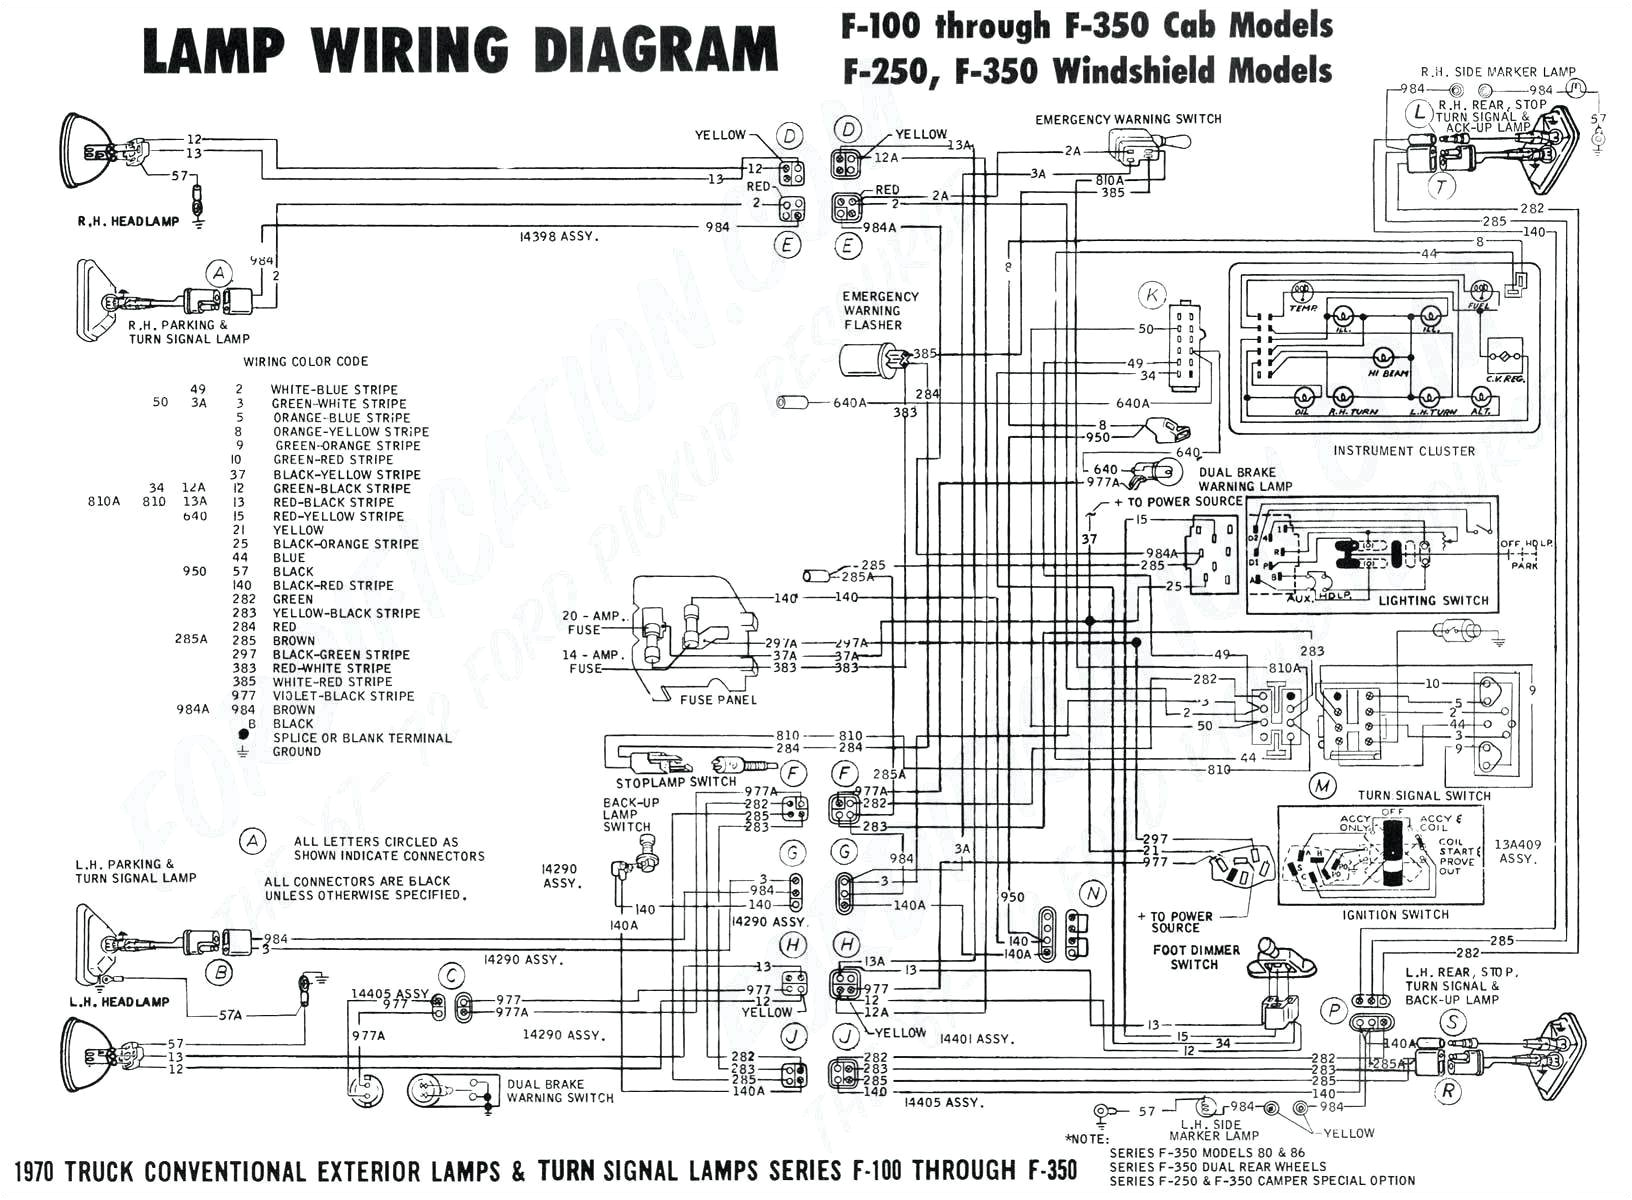 1999 chevy silverado wiring diagram kodiak trailer wiring diagram new 1999 chevy silverado trailer wiring diagram 13h jpg